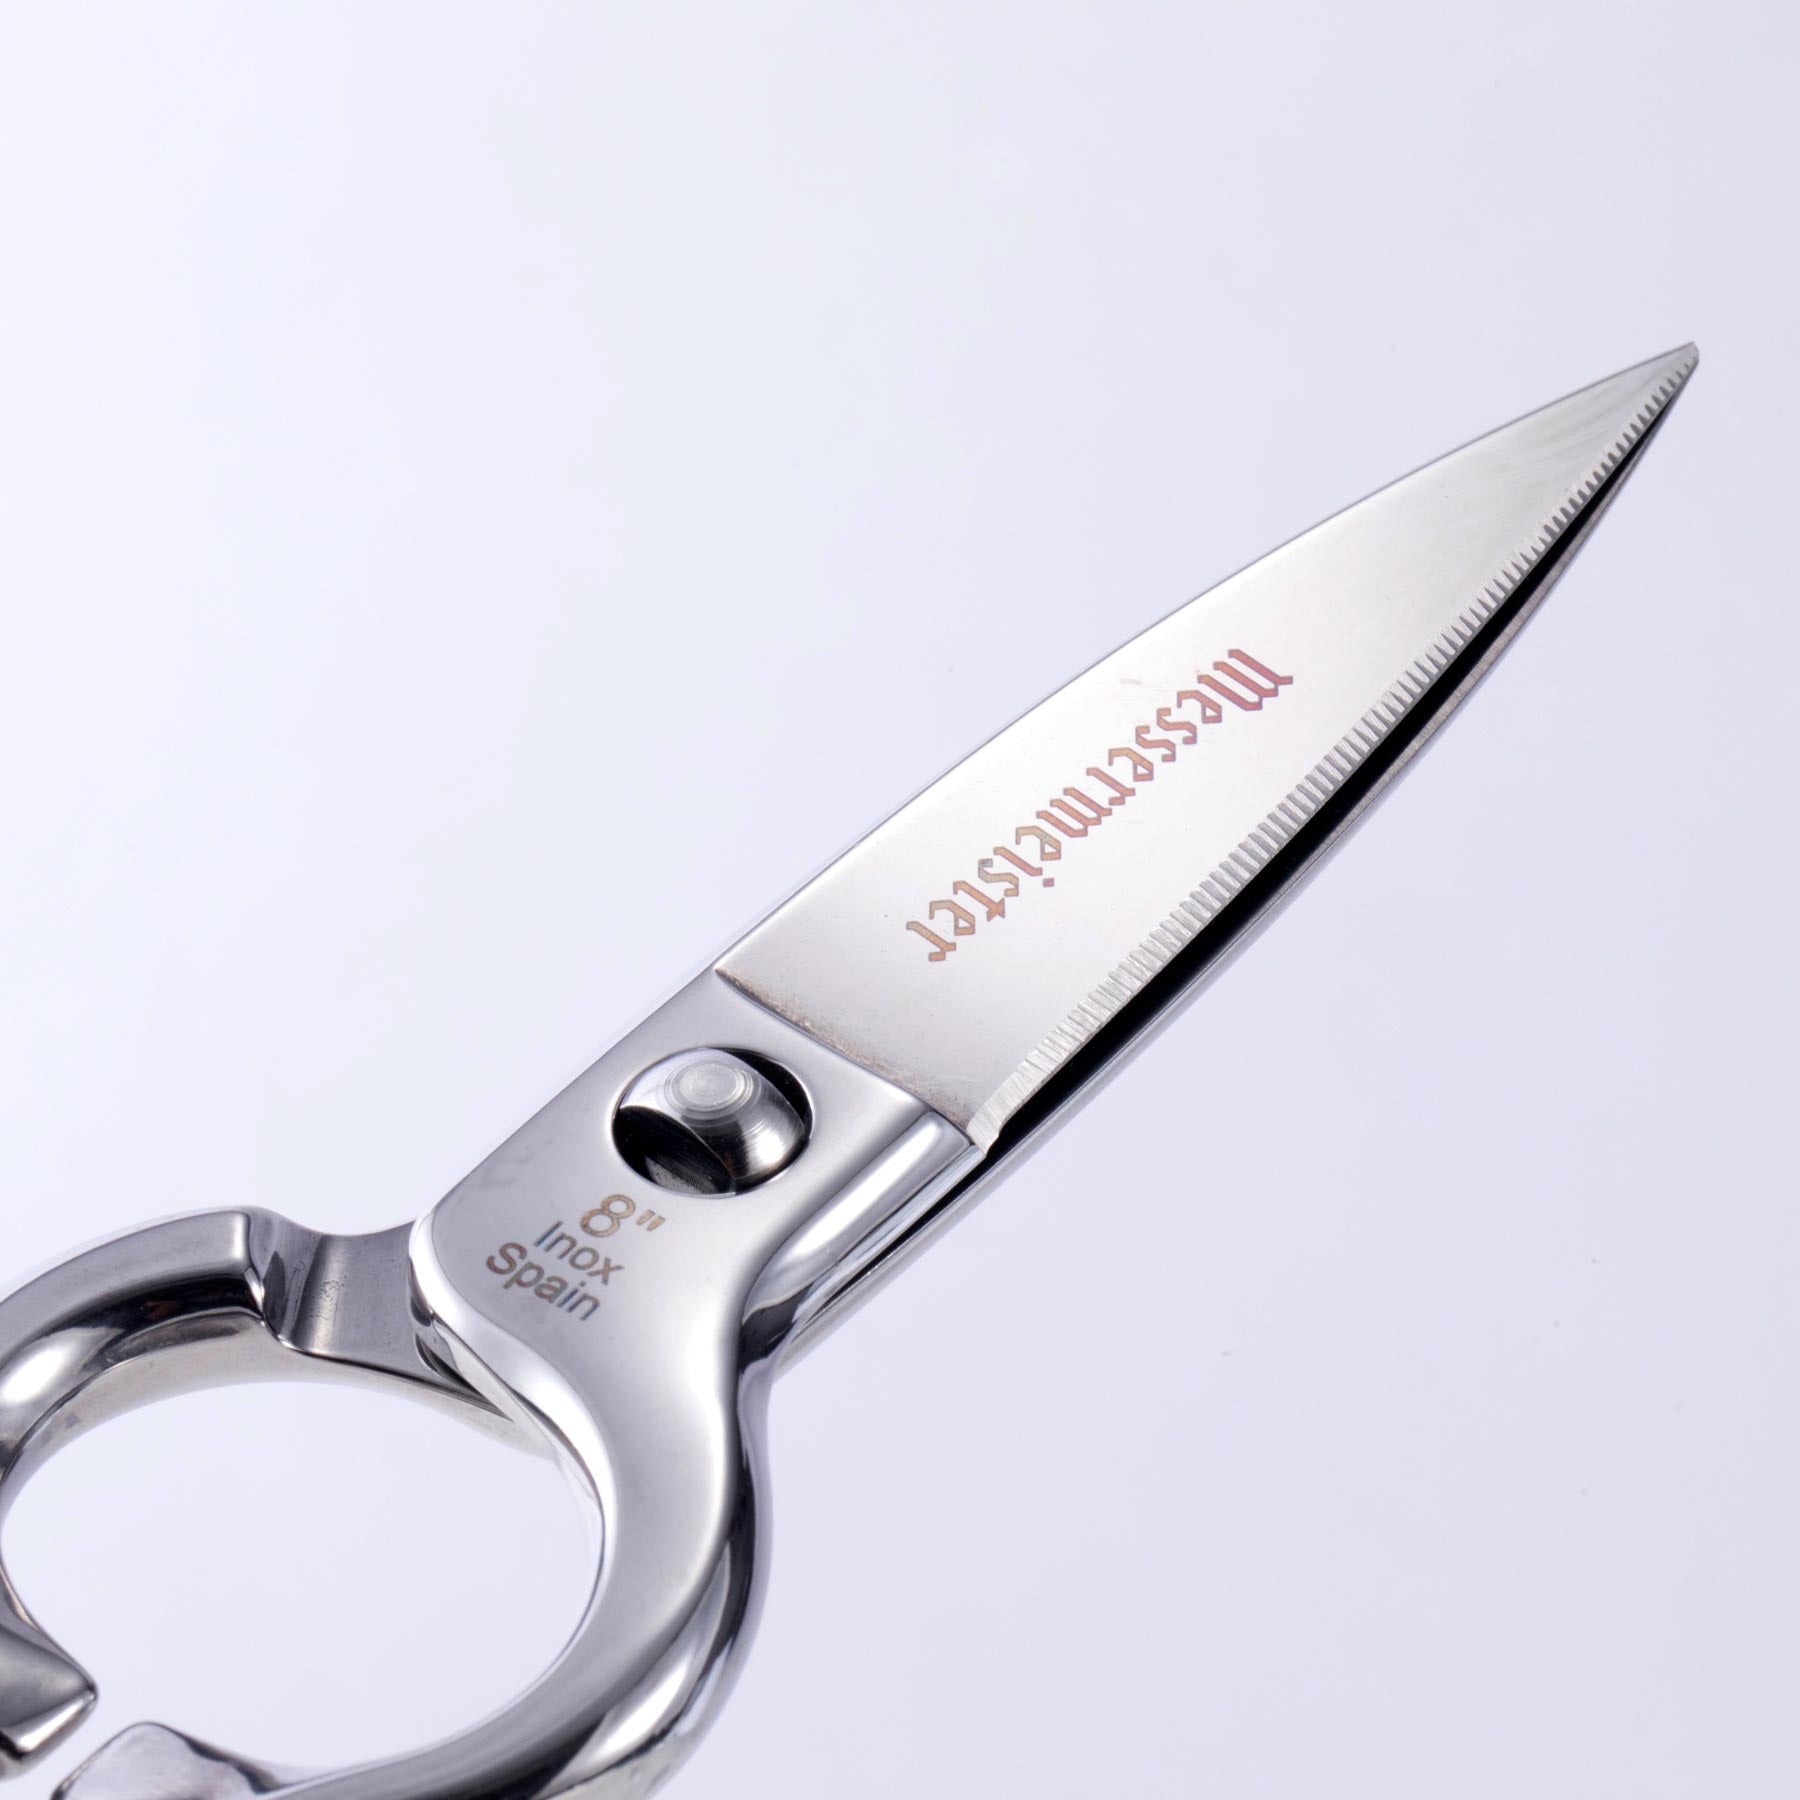 Forged Come Apart Kitchen Scissors/Shears|Gunter Wilhelm